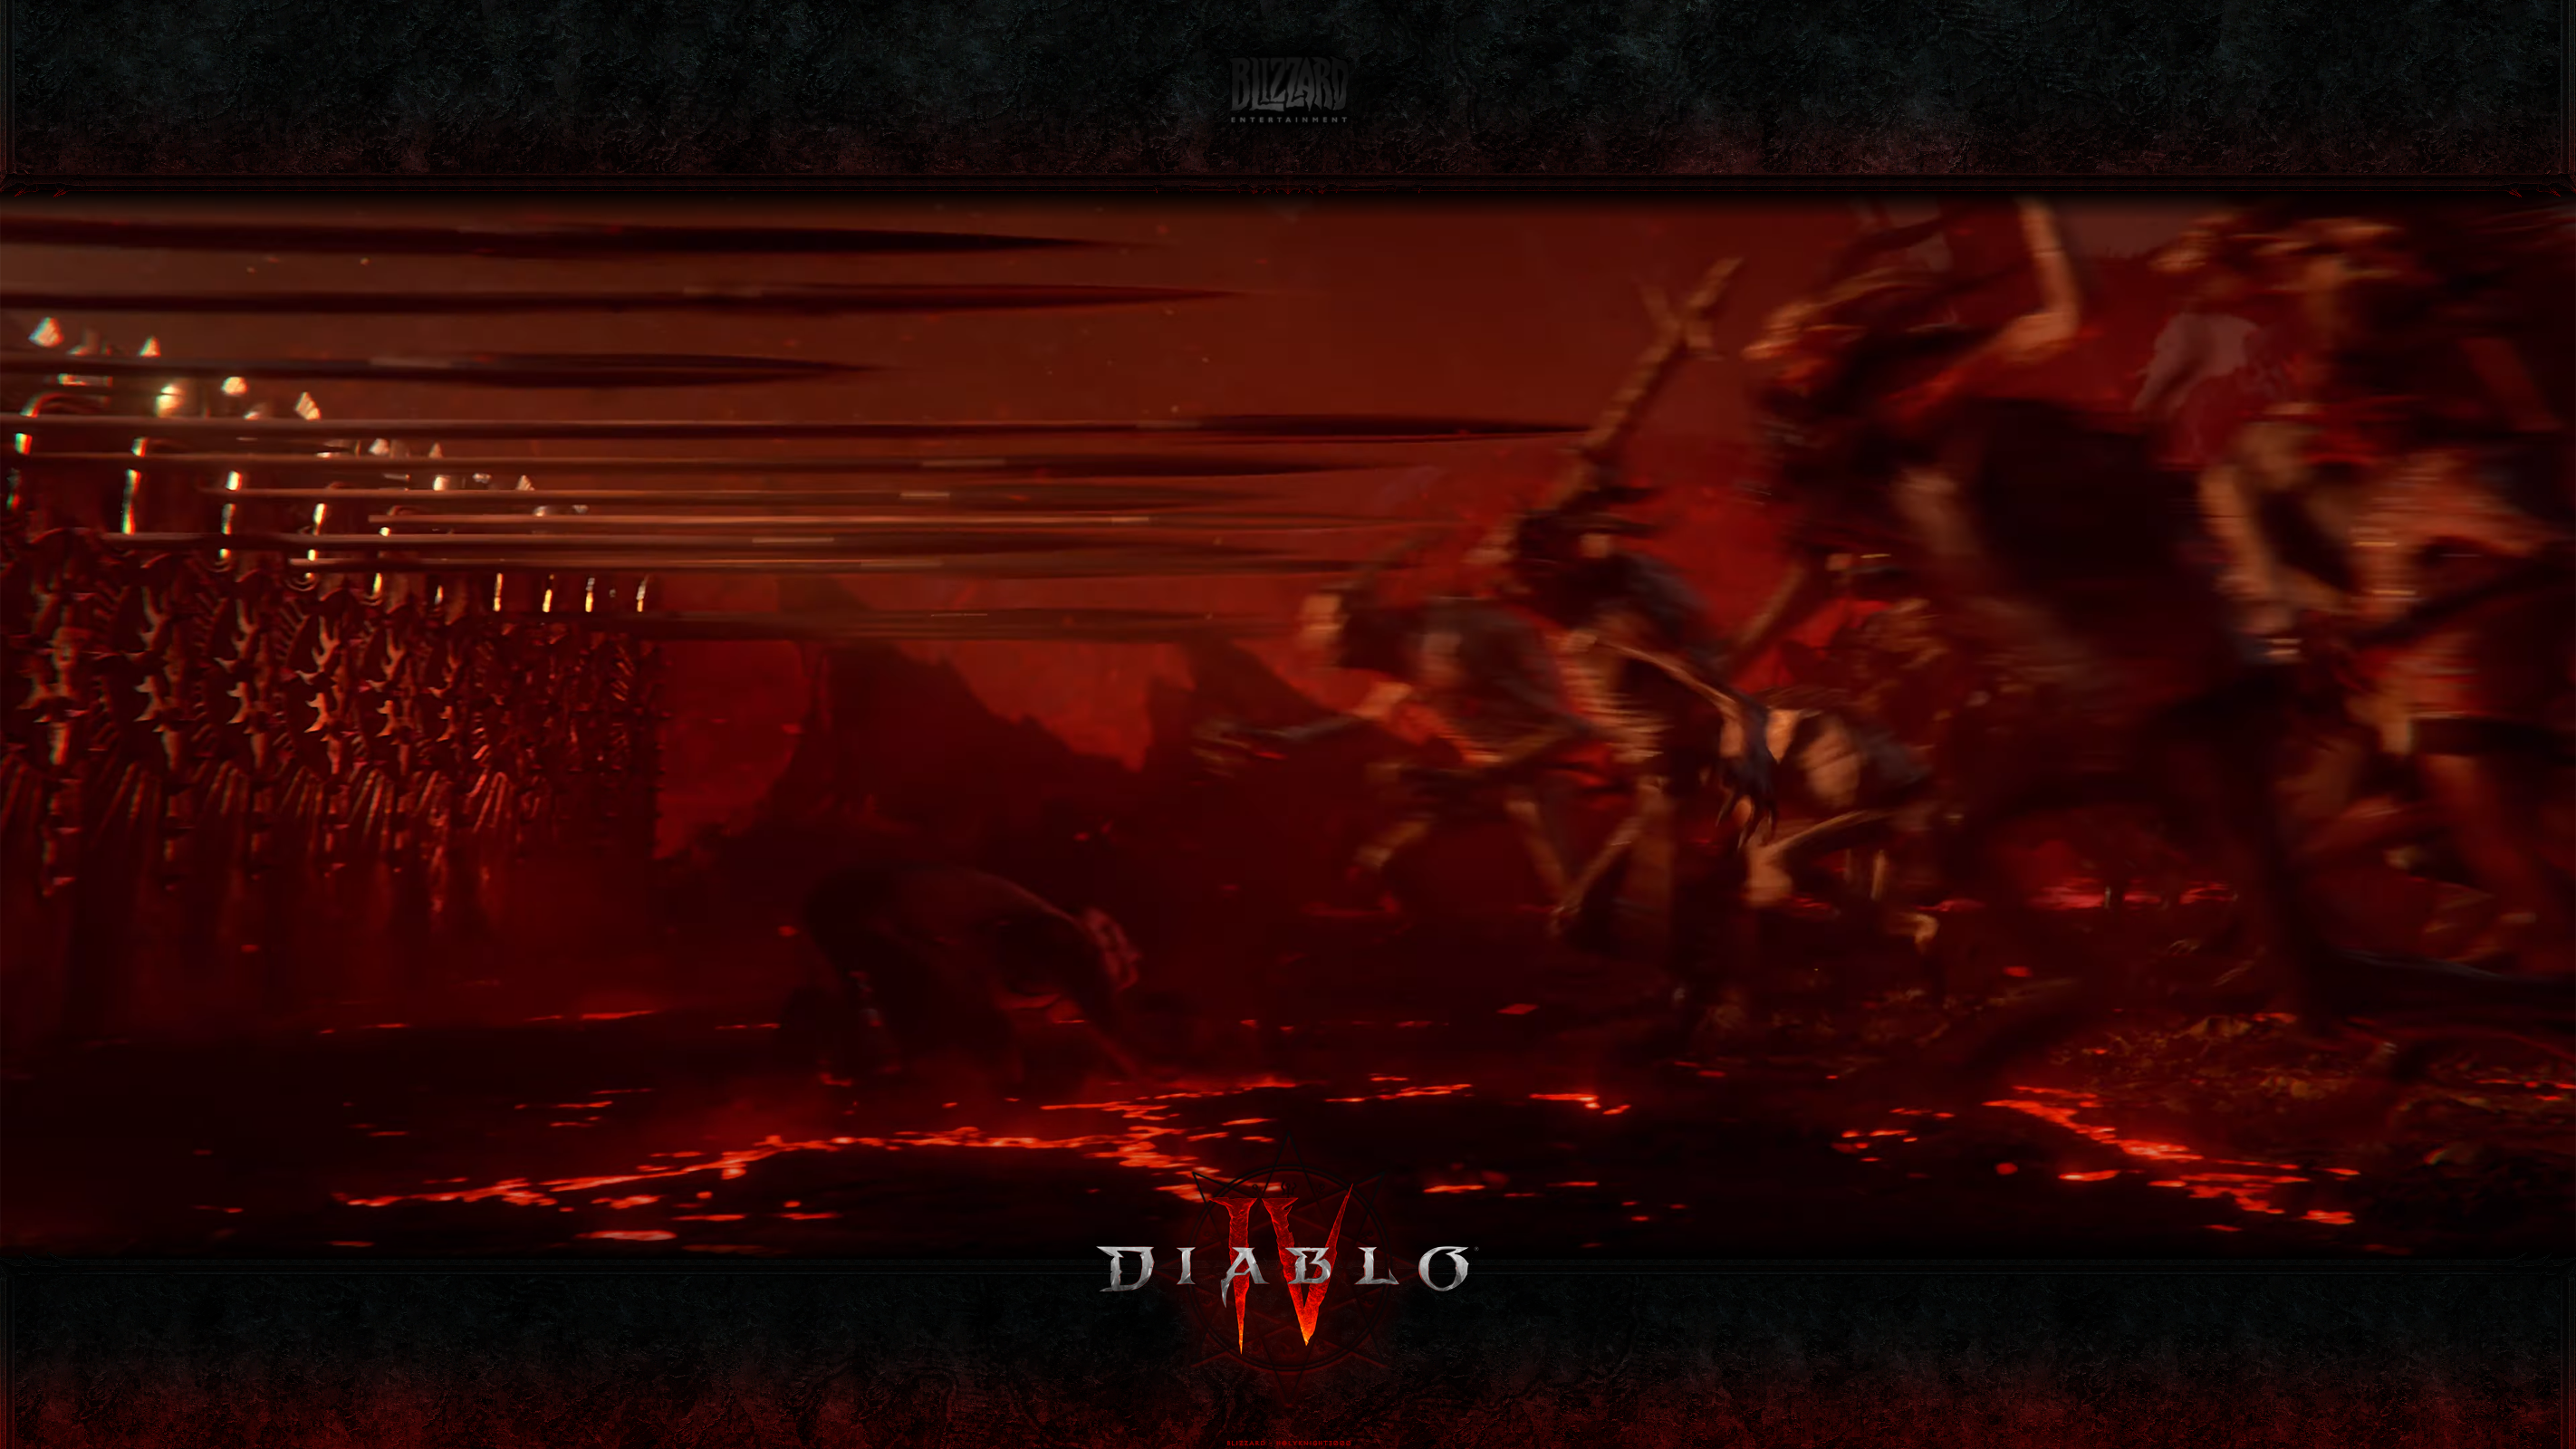 Diablo IV: The Release Date Trailer #33